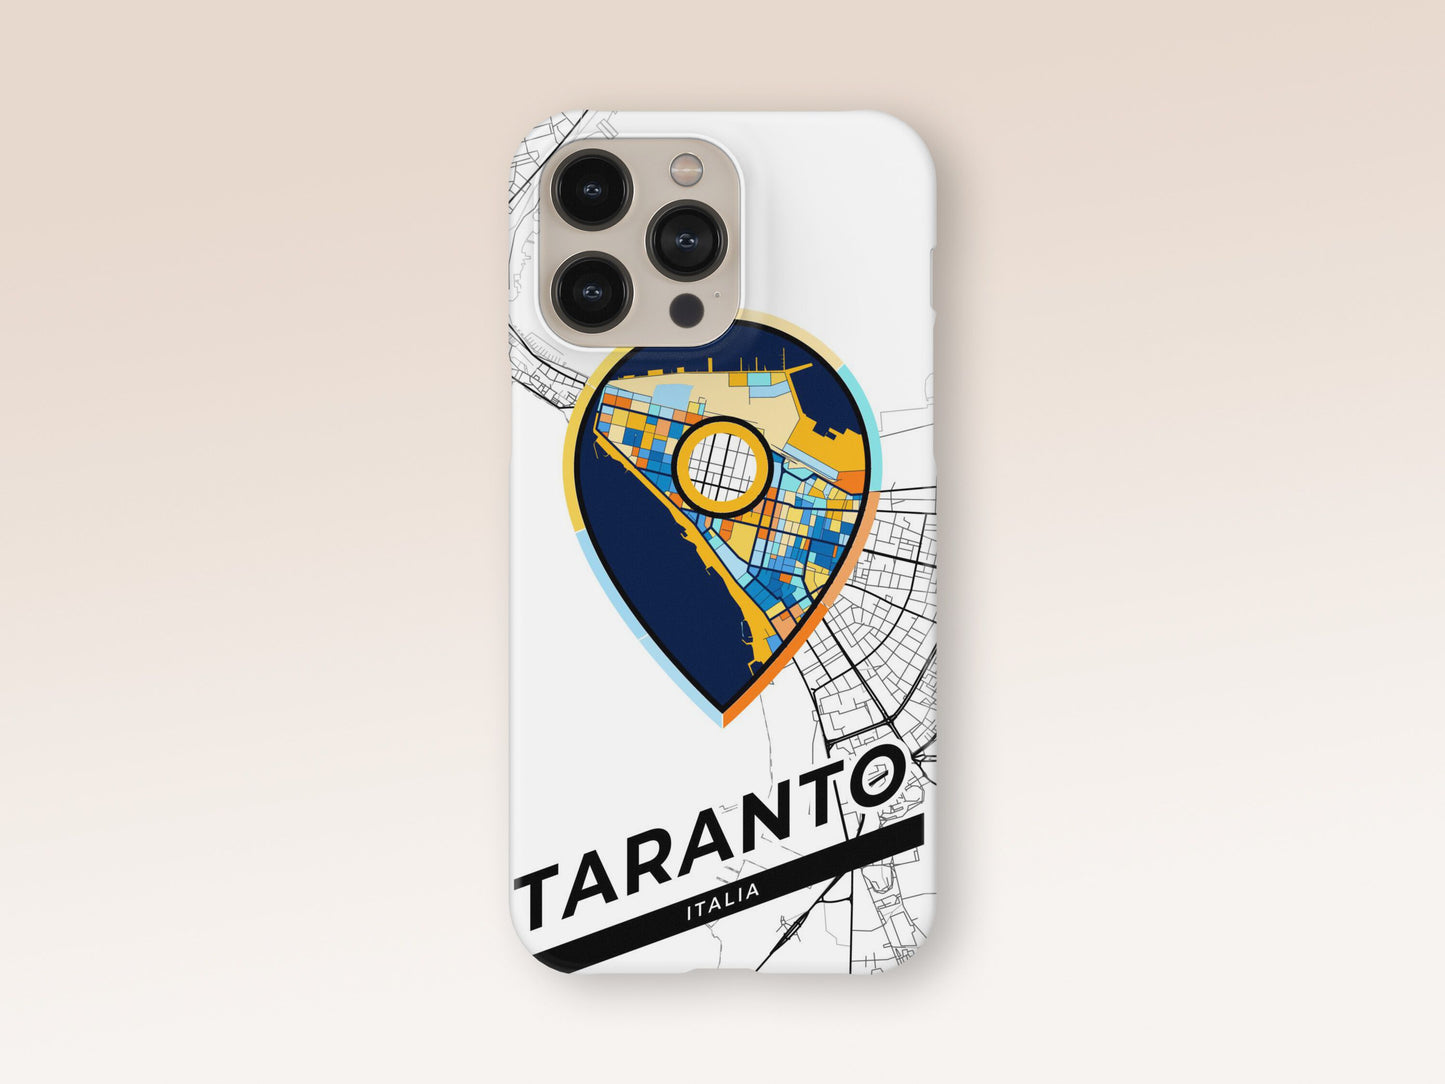 Taranto Italy slim phone case with colorful icon 1